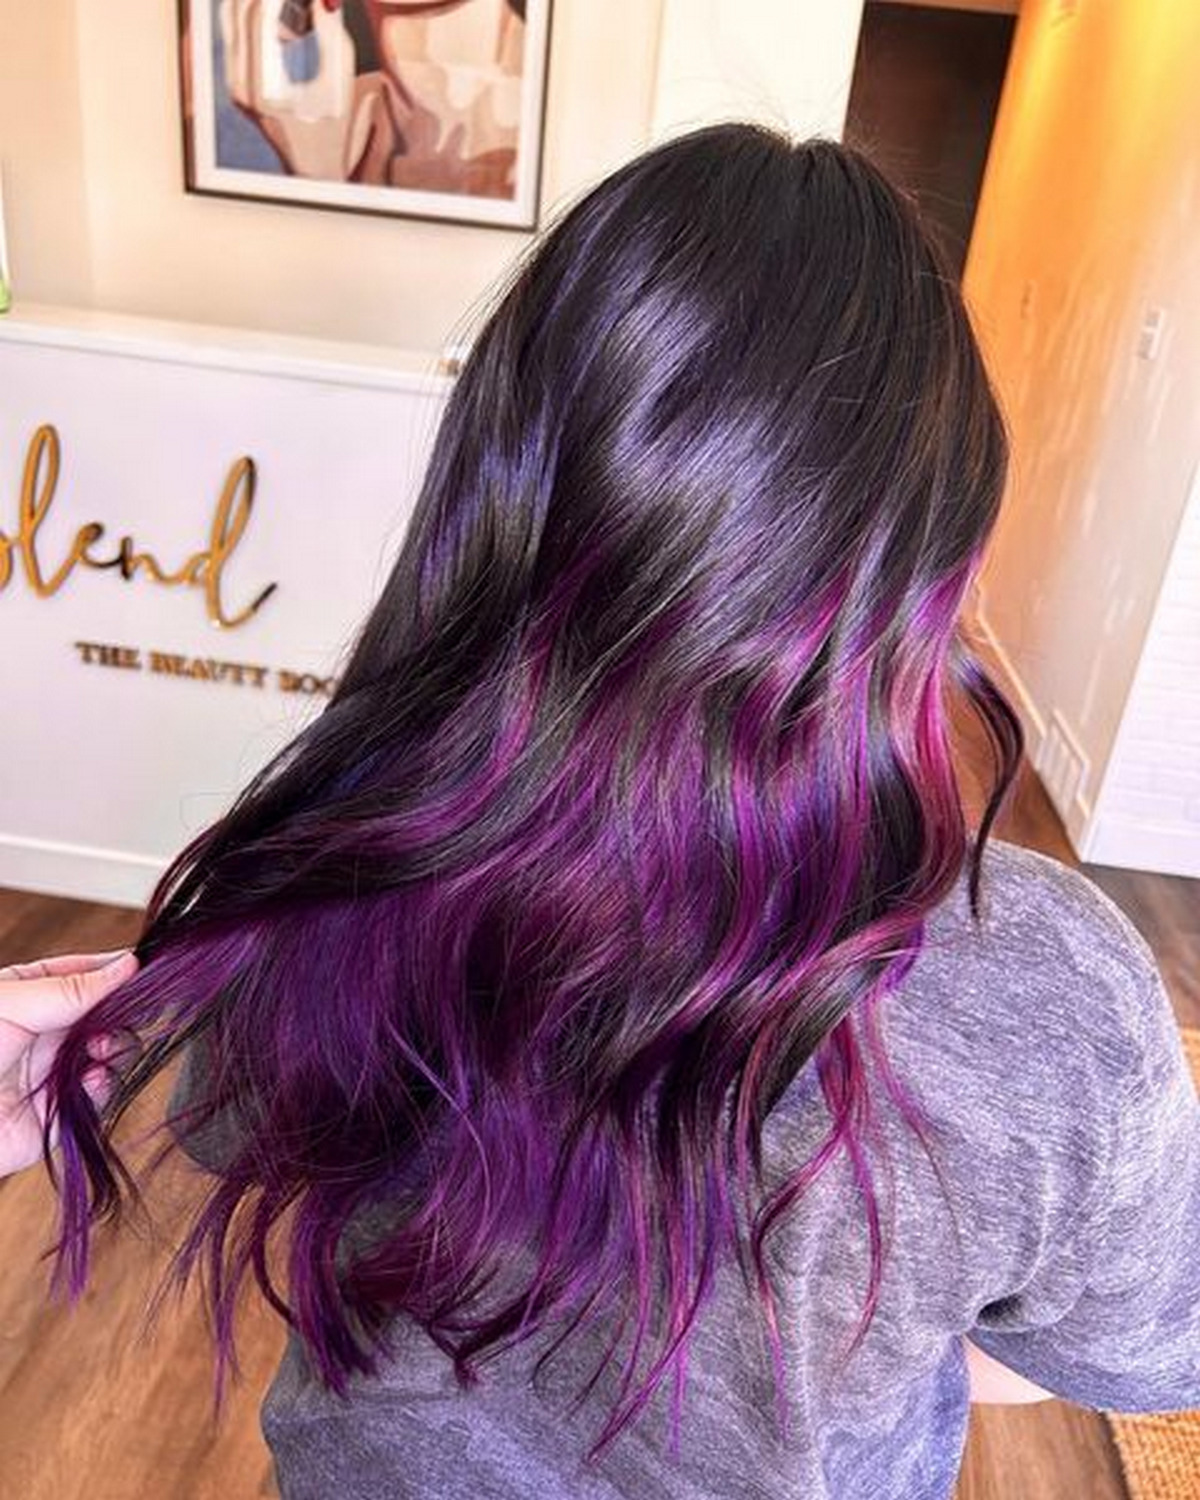 Black Hair And Purple Highlights